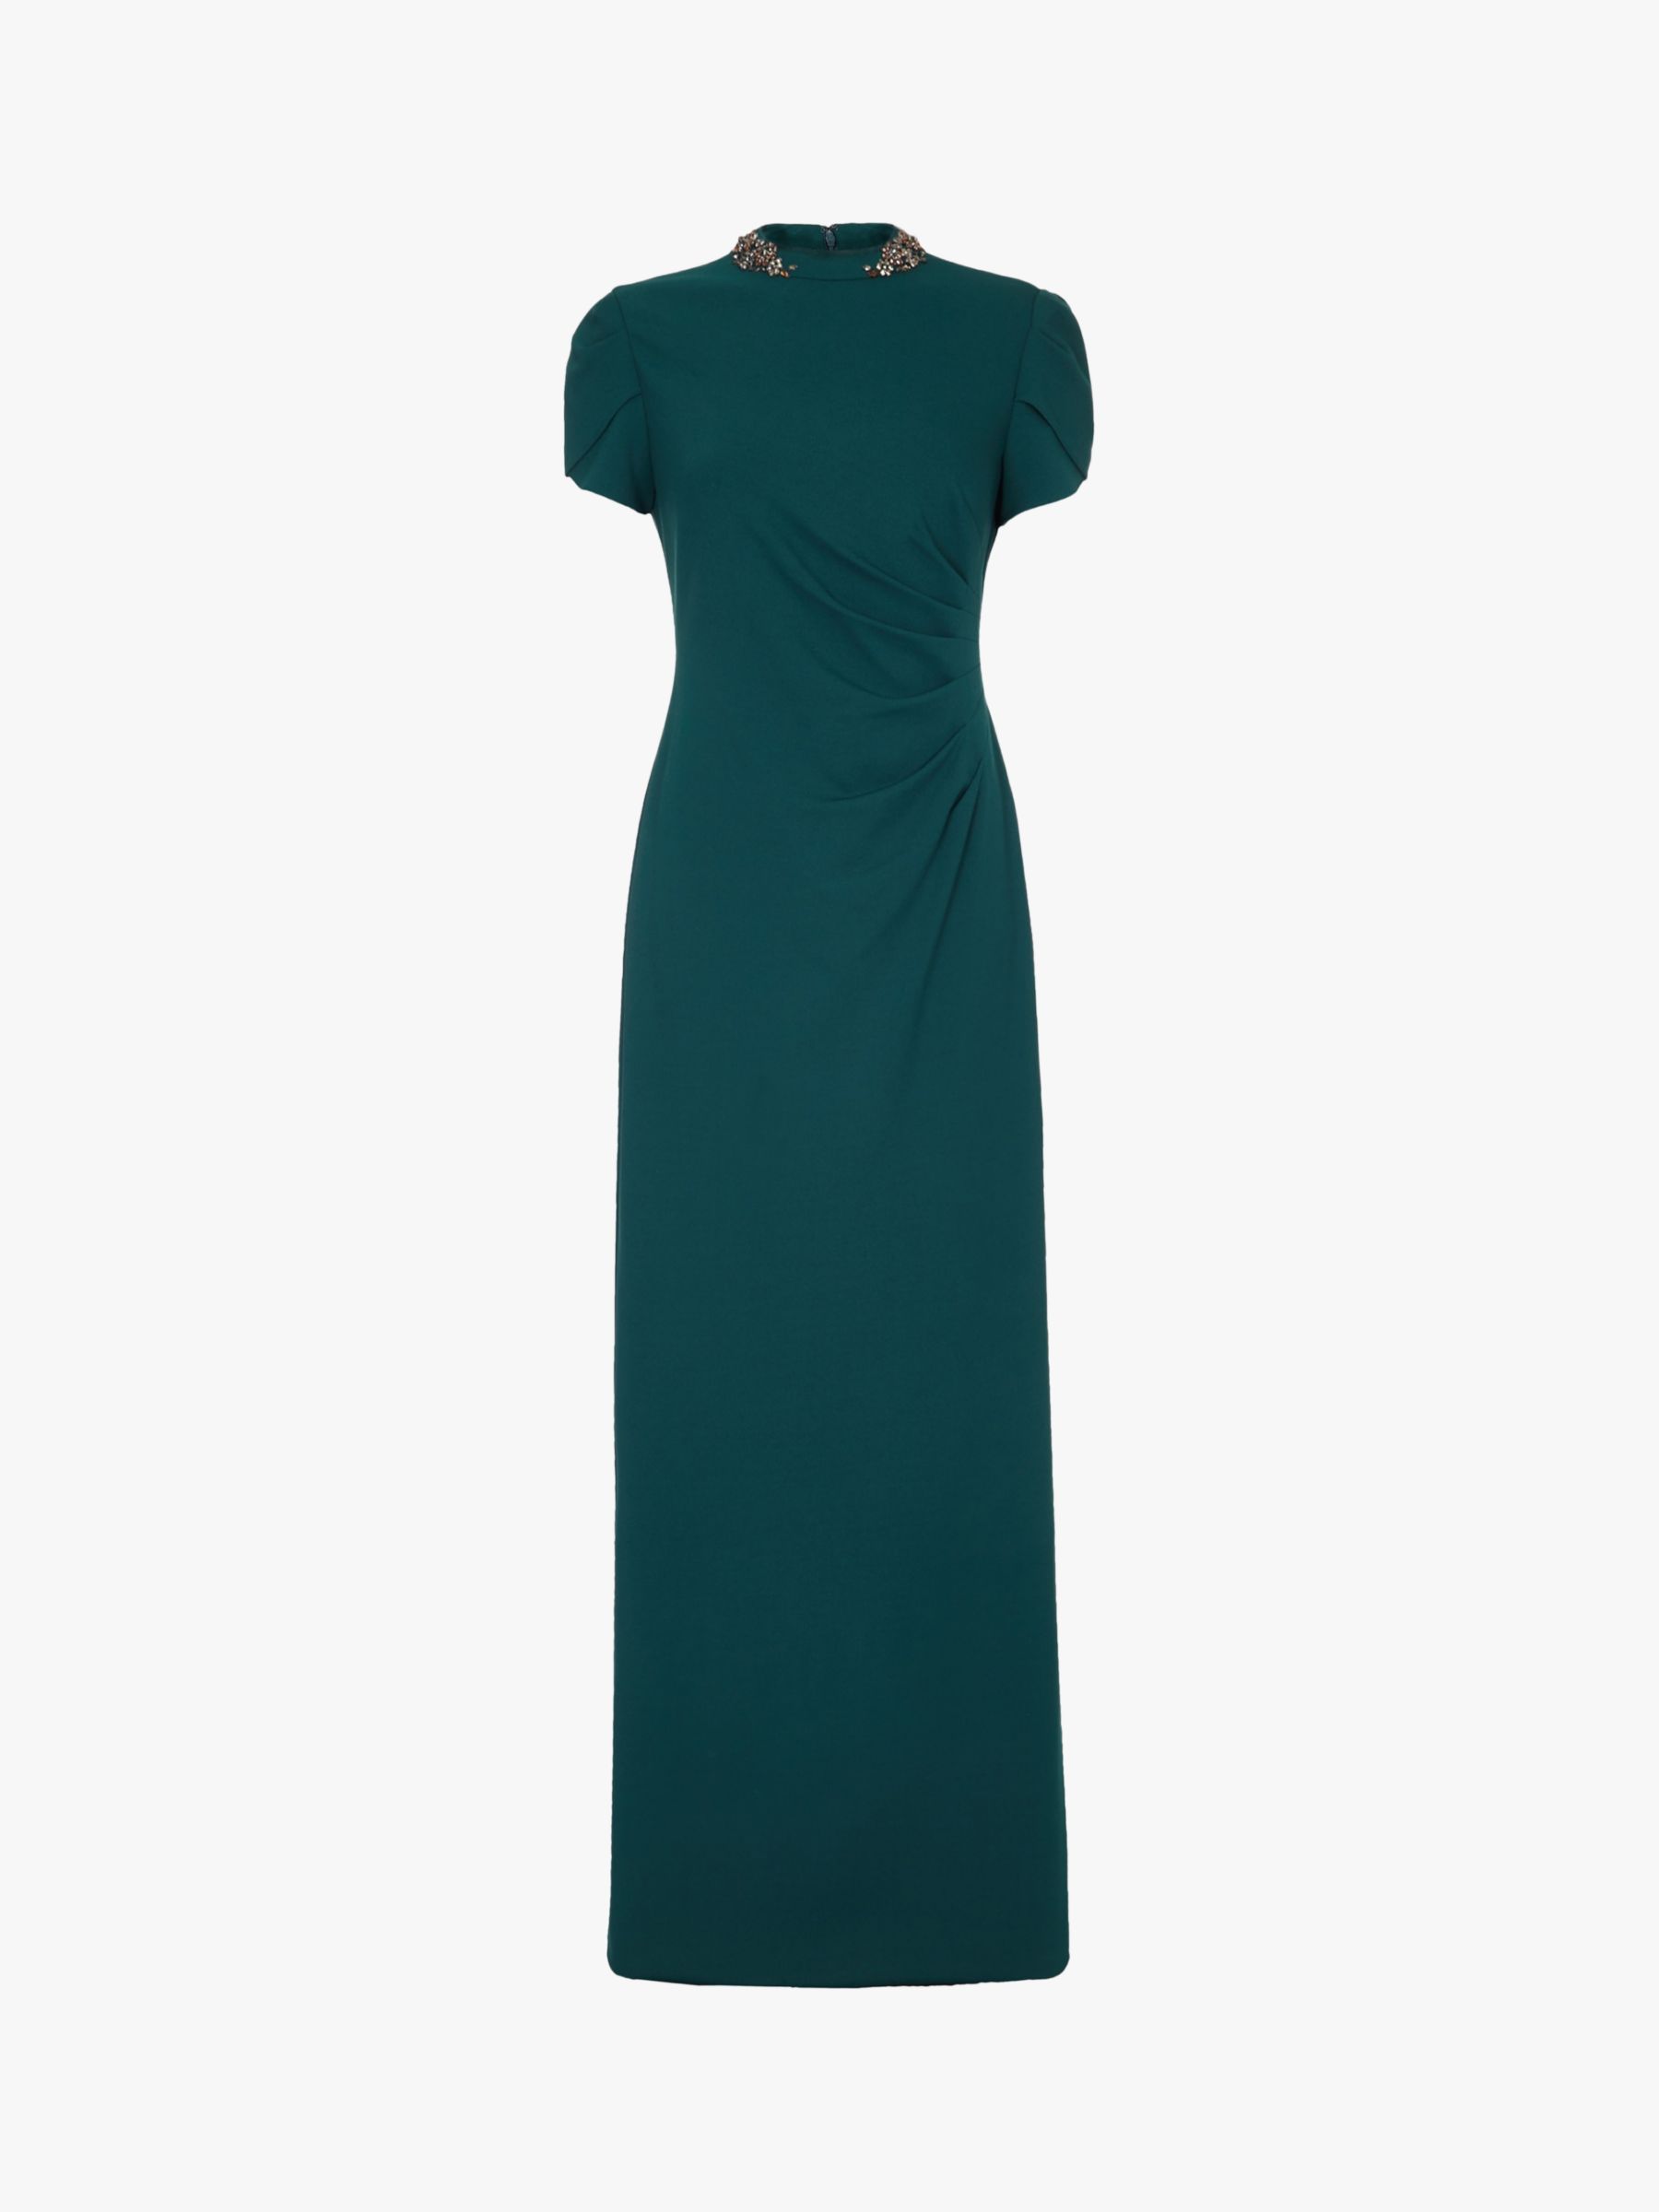 Adrianna Papell Tulip Sleeve Crepe Dress, Dusty Emerald